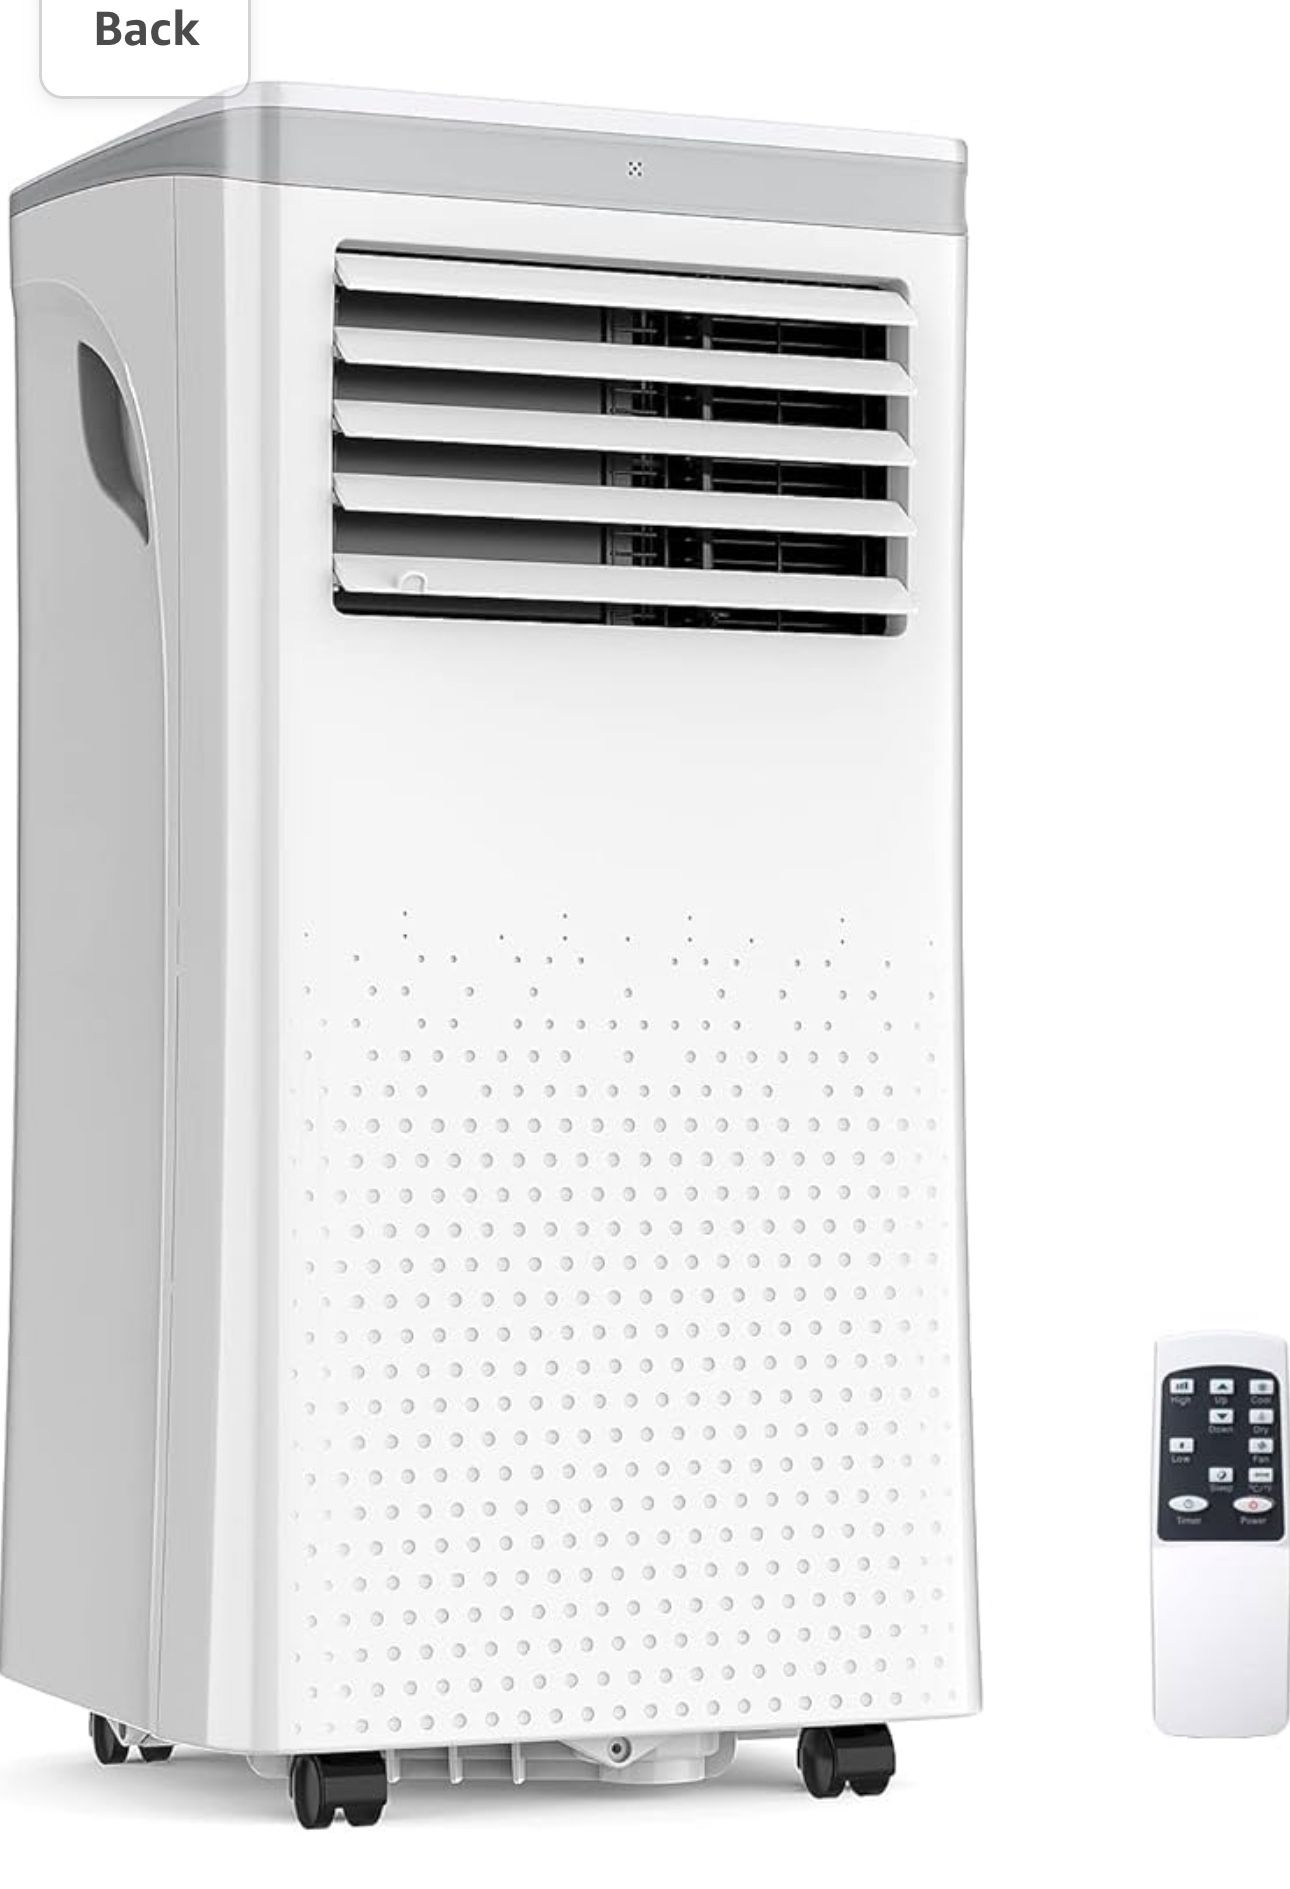 10000 BTU Portable Air Conditioner 4-in-1 Portable AC Unit Cool up to 400 sq.ft, Portable Air Conditioners with Remote Control Mini Air Conditioner 24